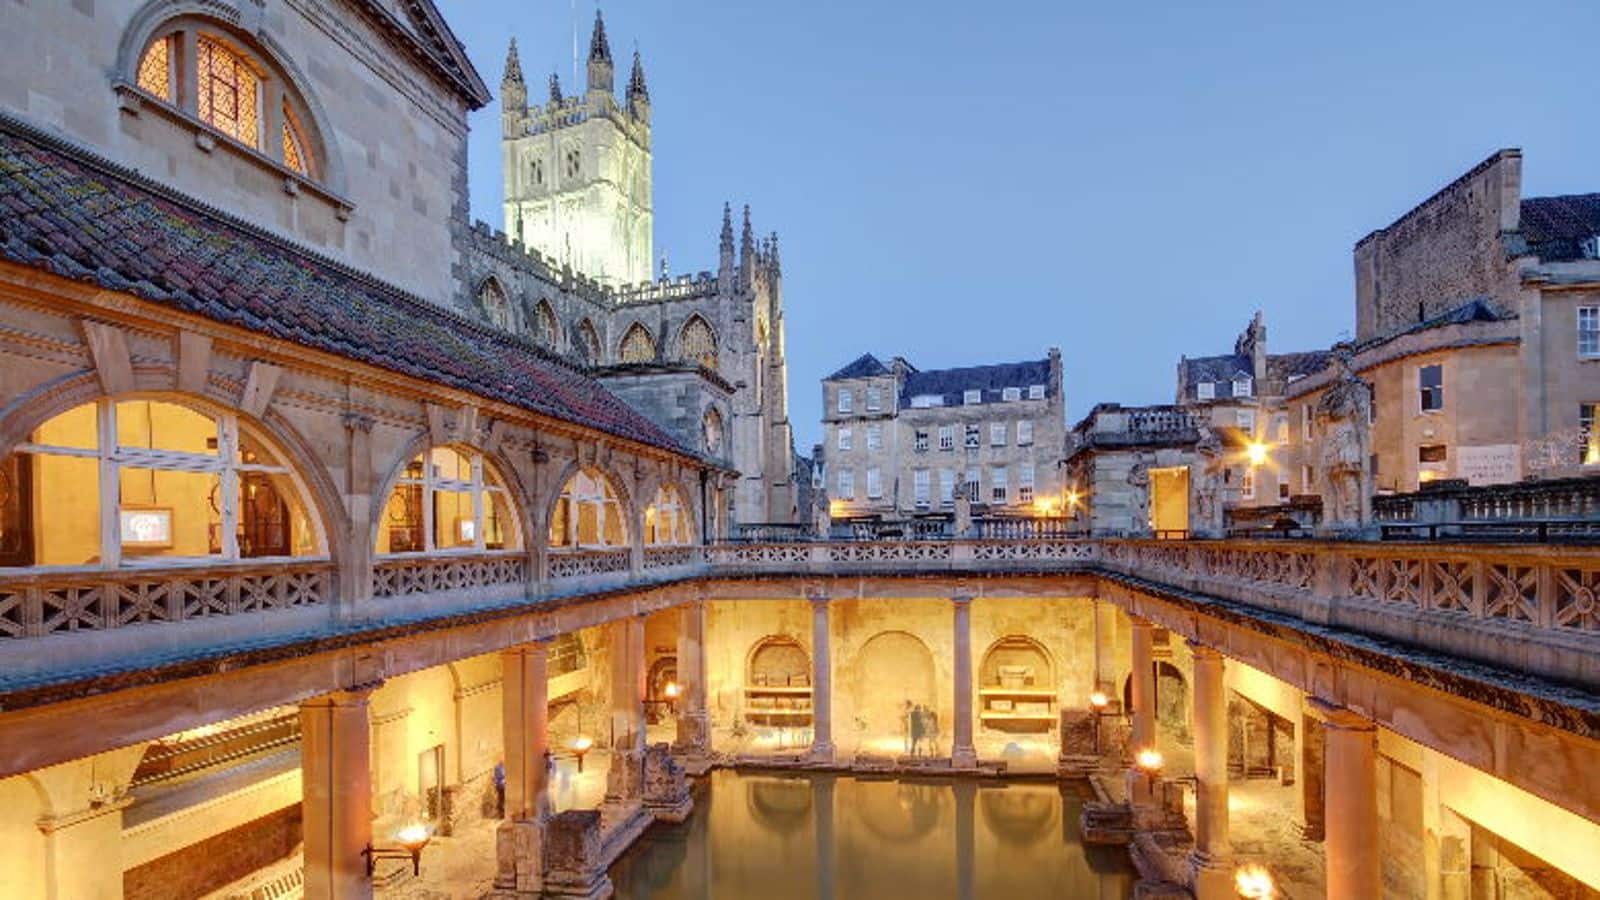 Bath in England offers a glimpse into the Victorian era